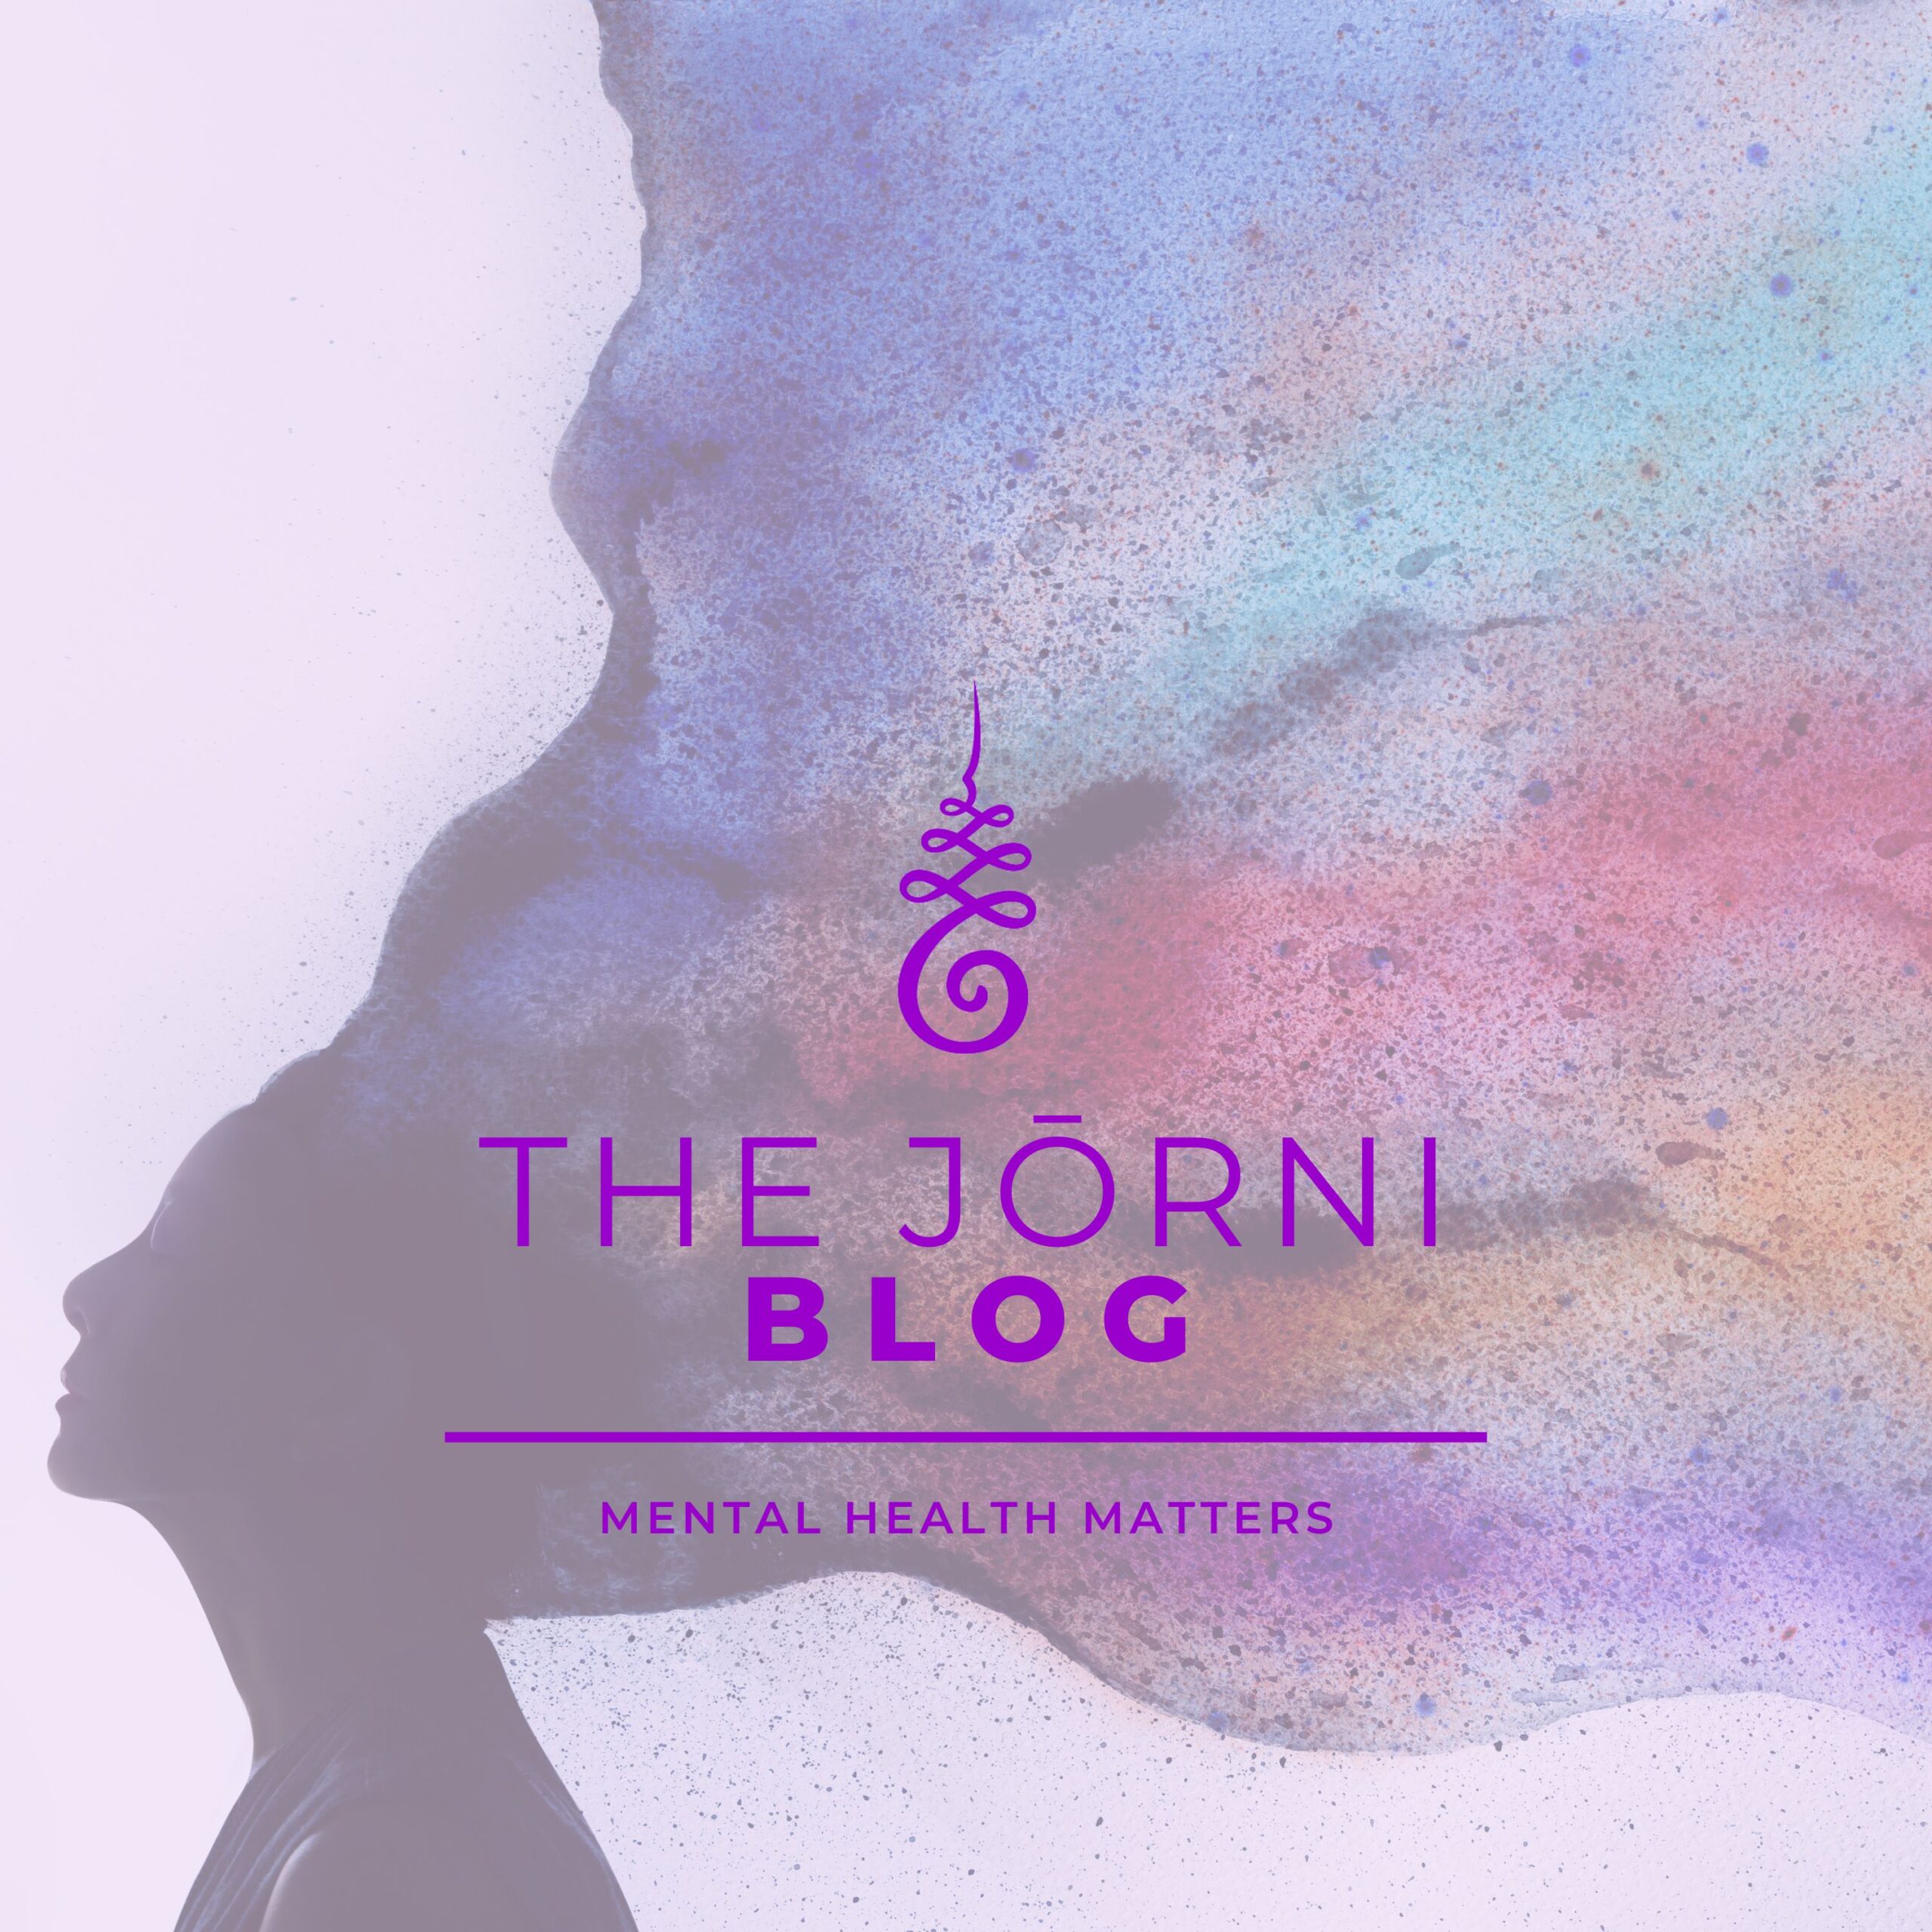 The Jōrni Blog